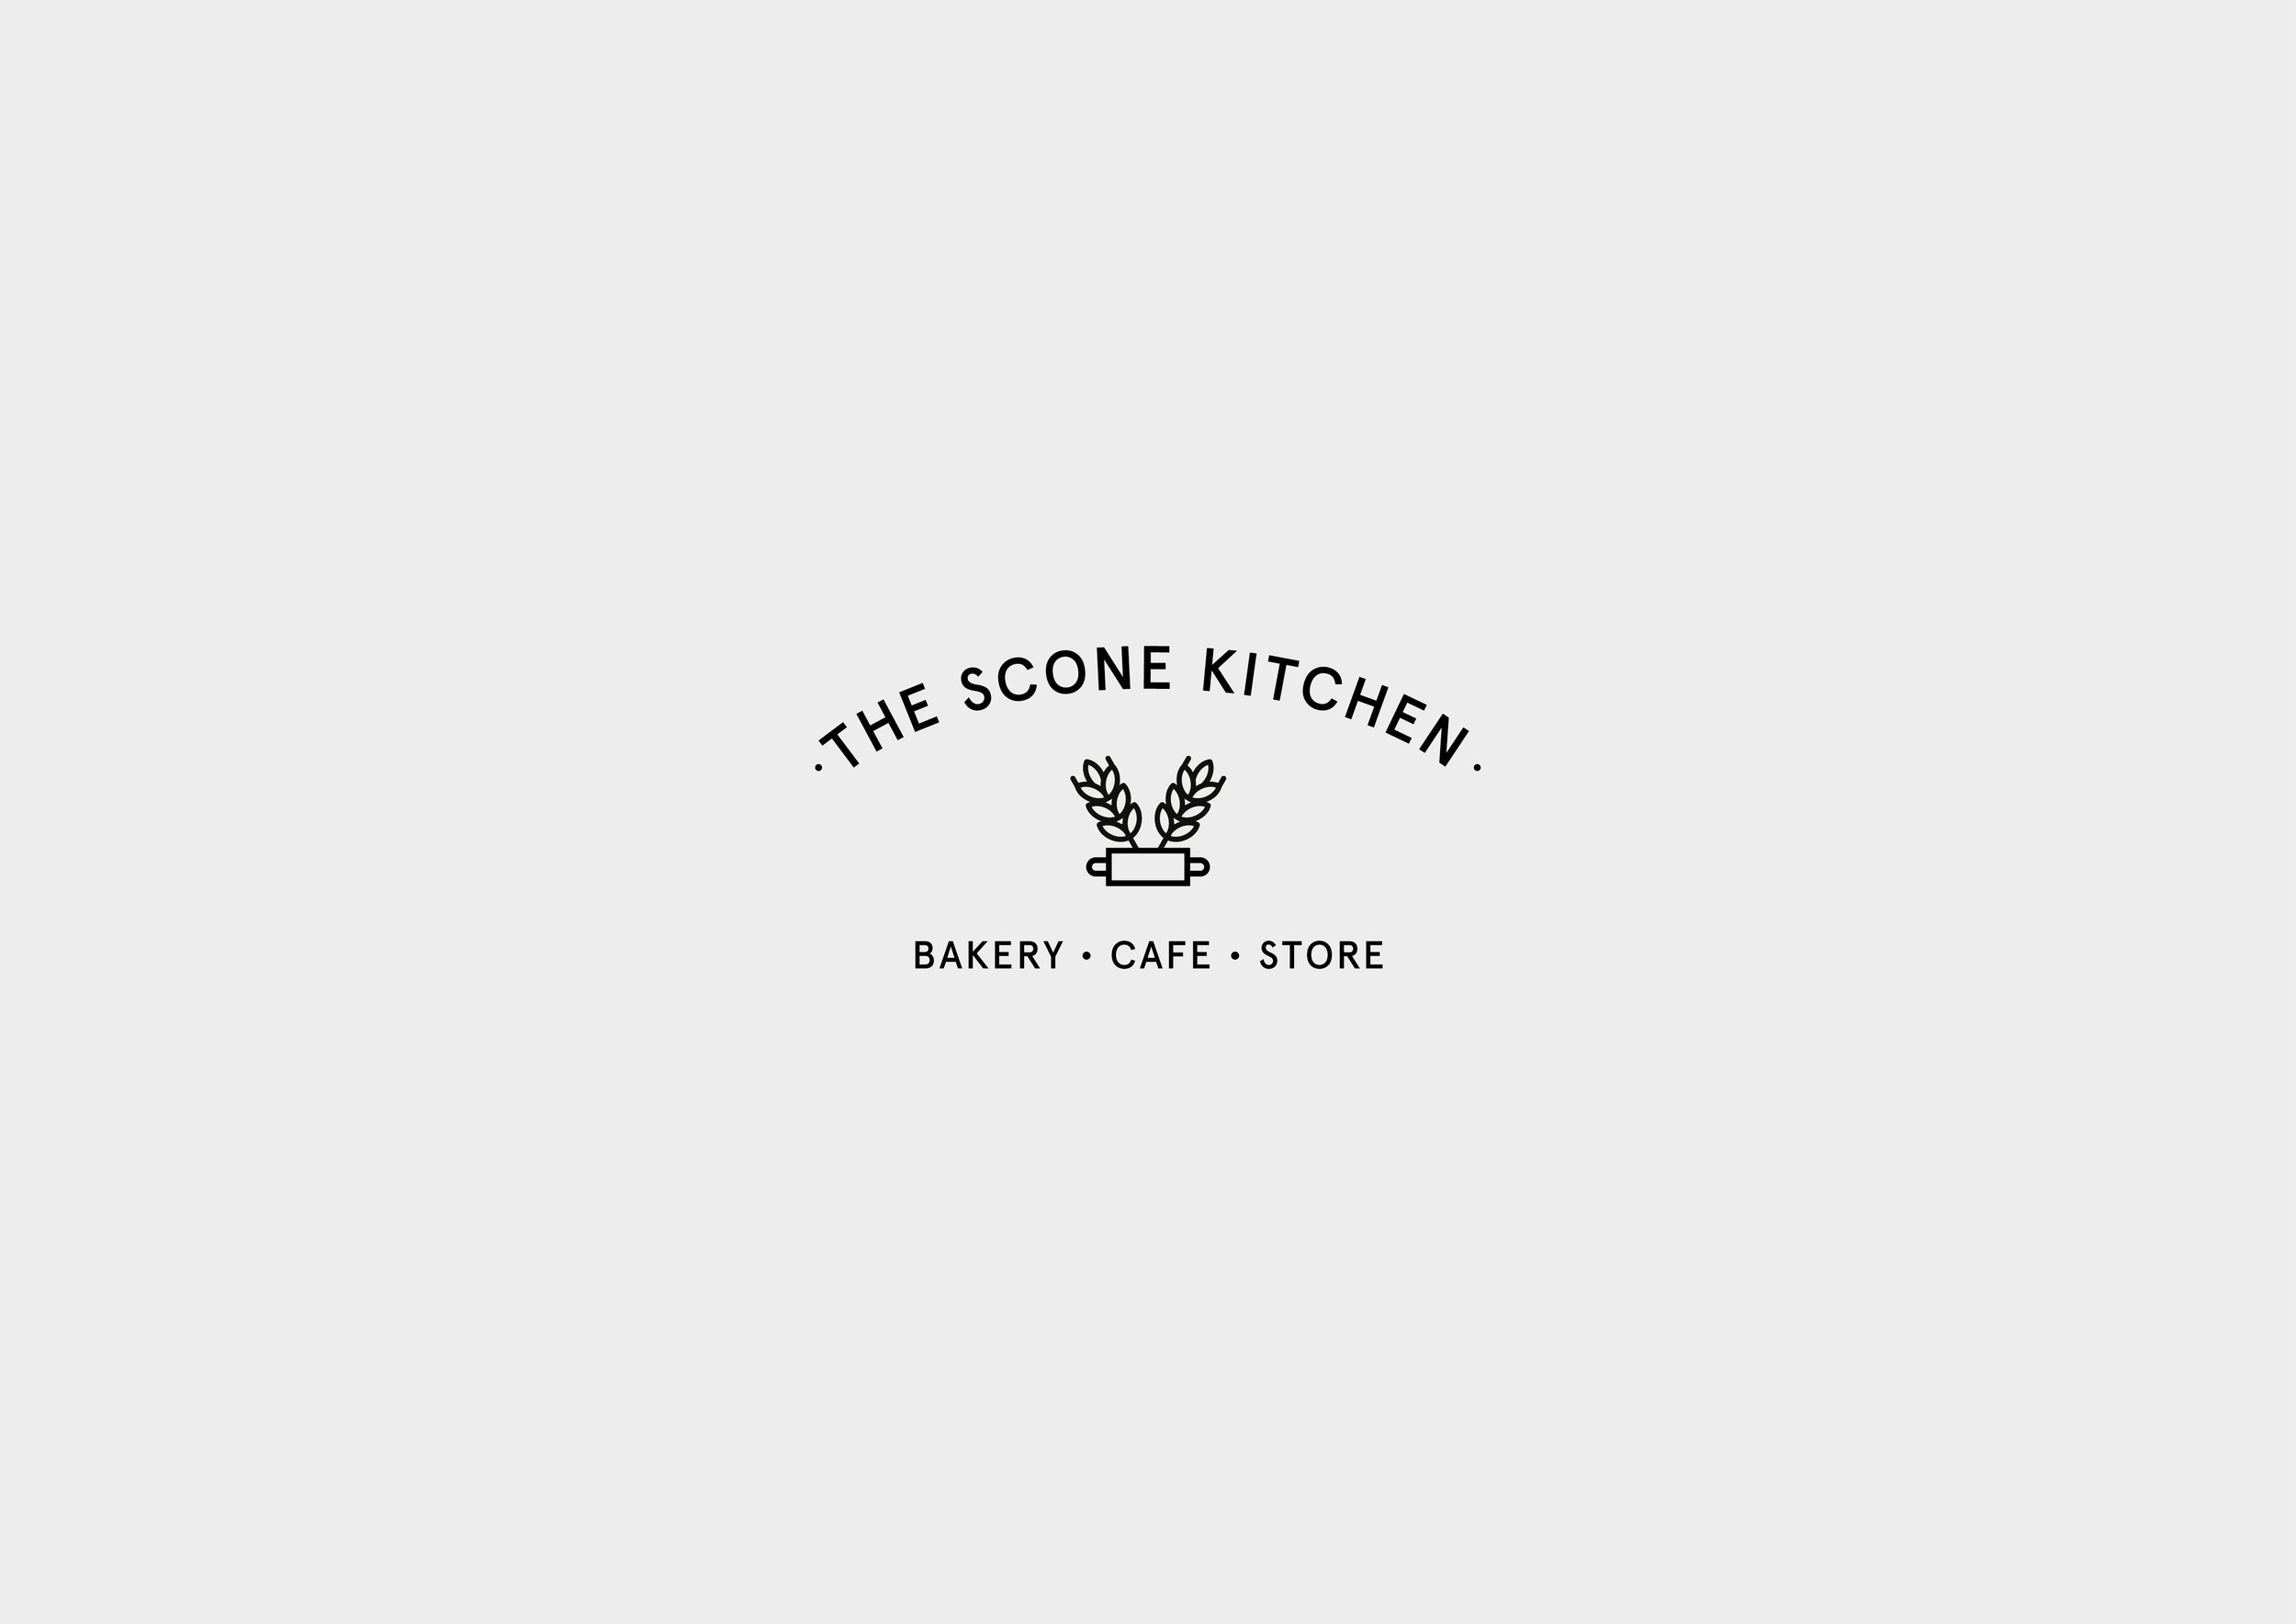 Logo Designer London, UK - The Scone Kitchen logo in platinum background